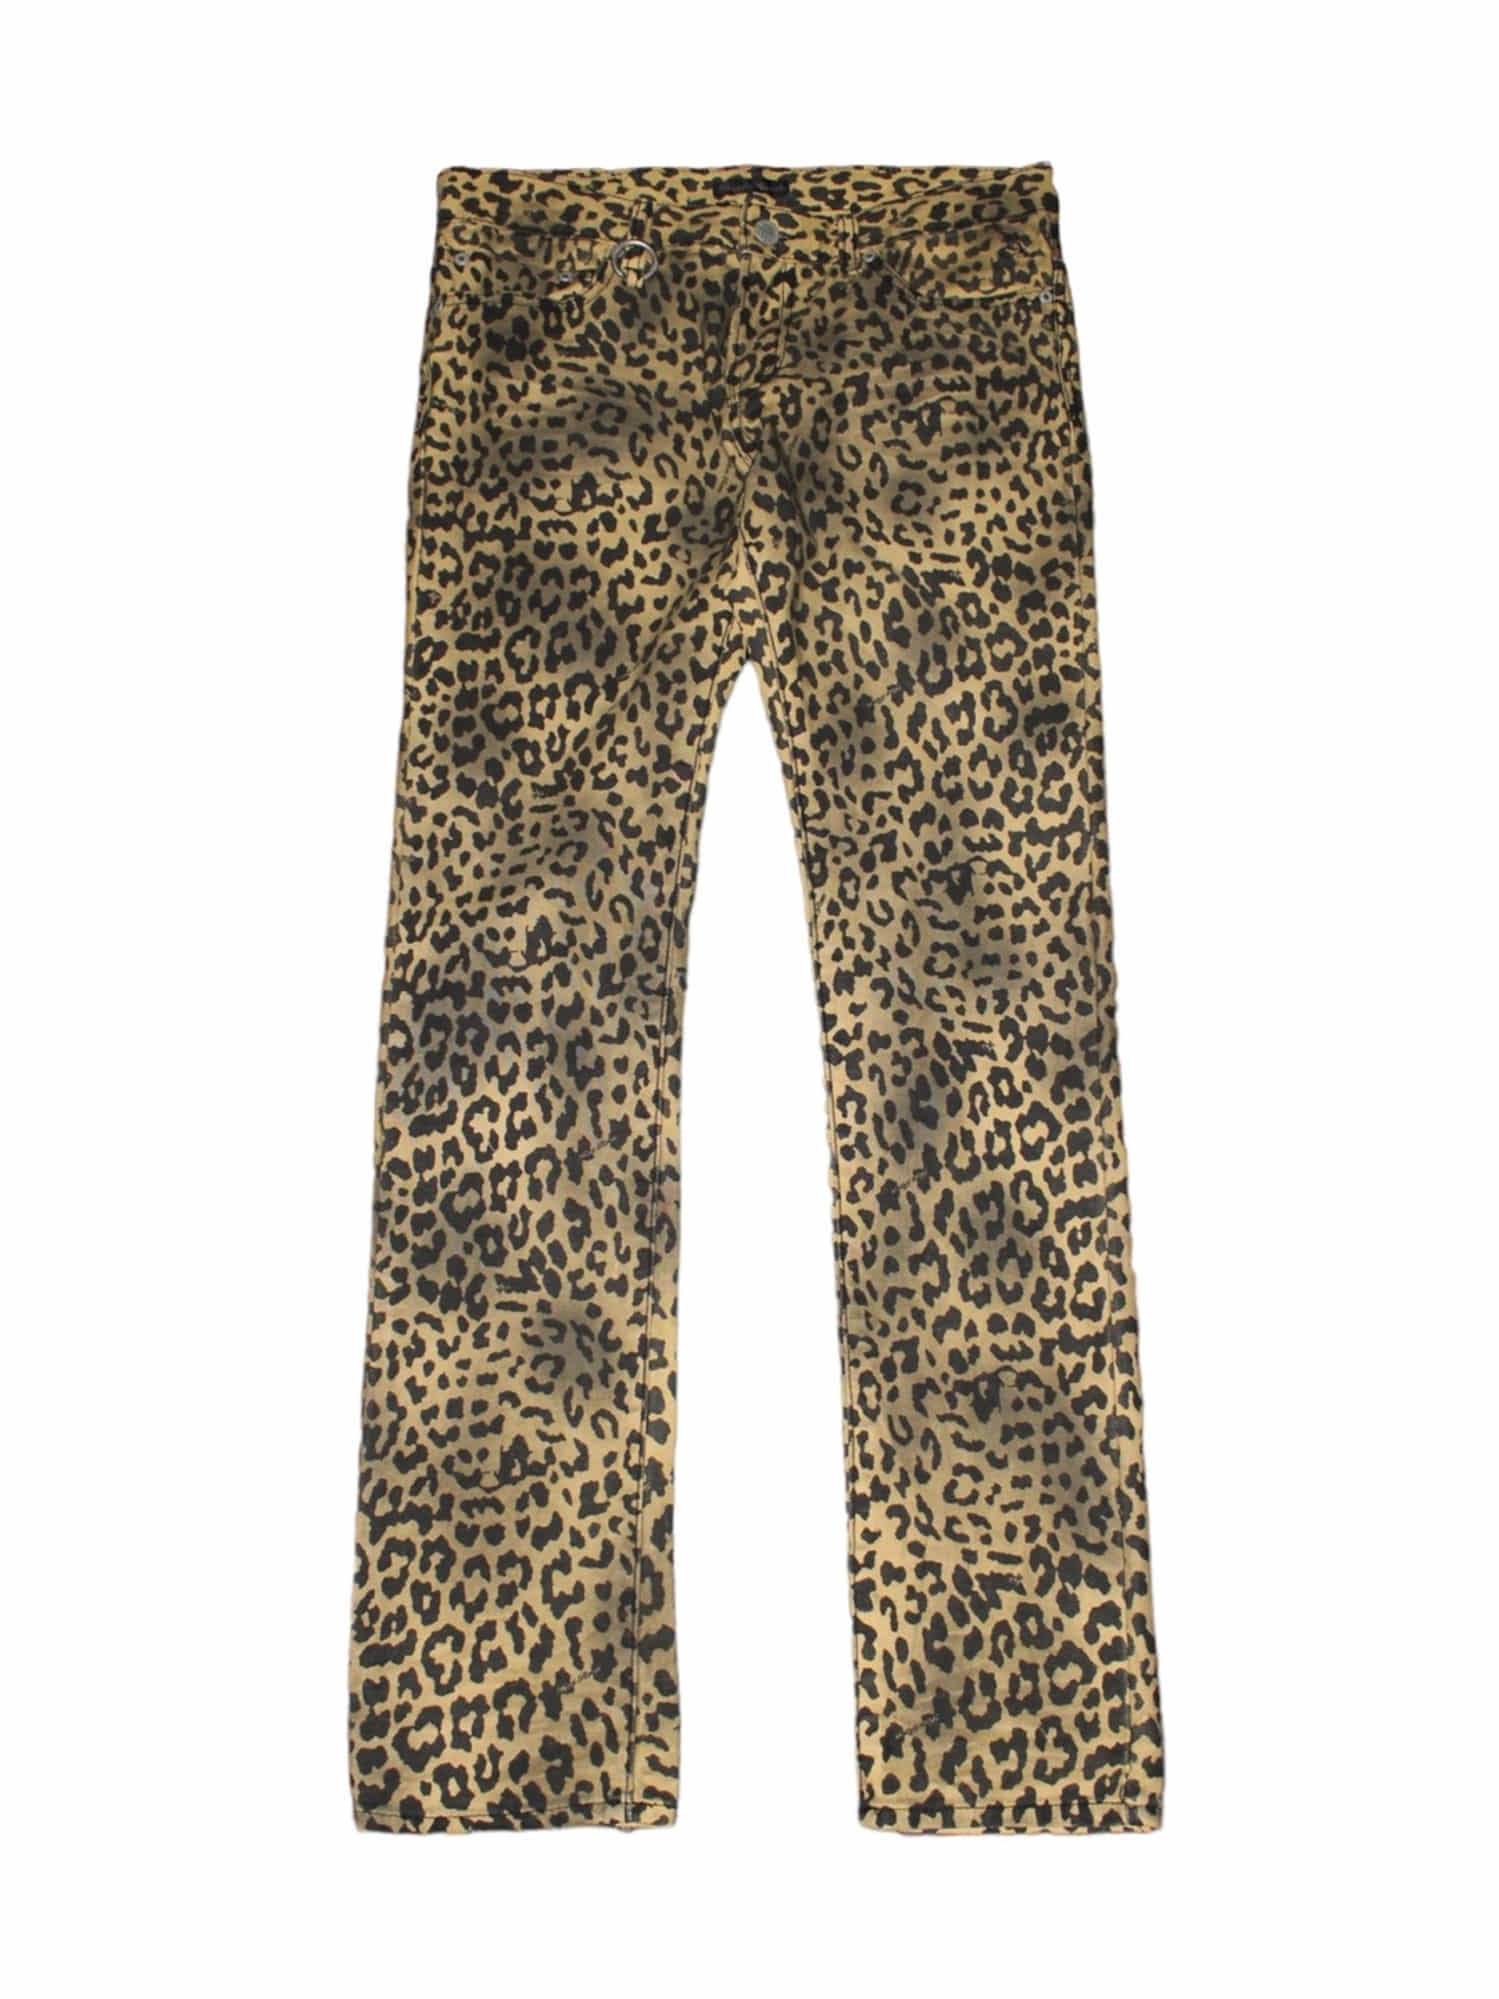 ROEN Leopard Skiny Fit Pants